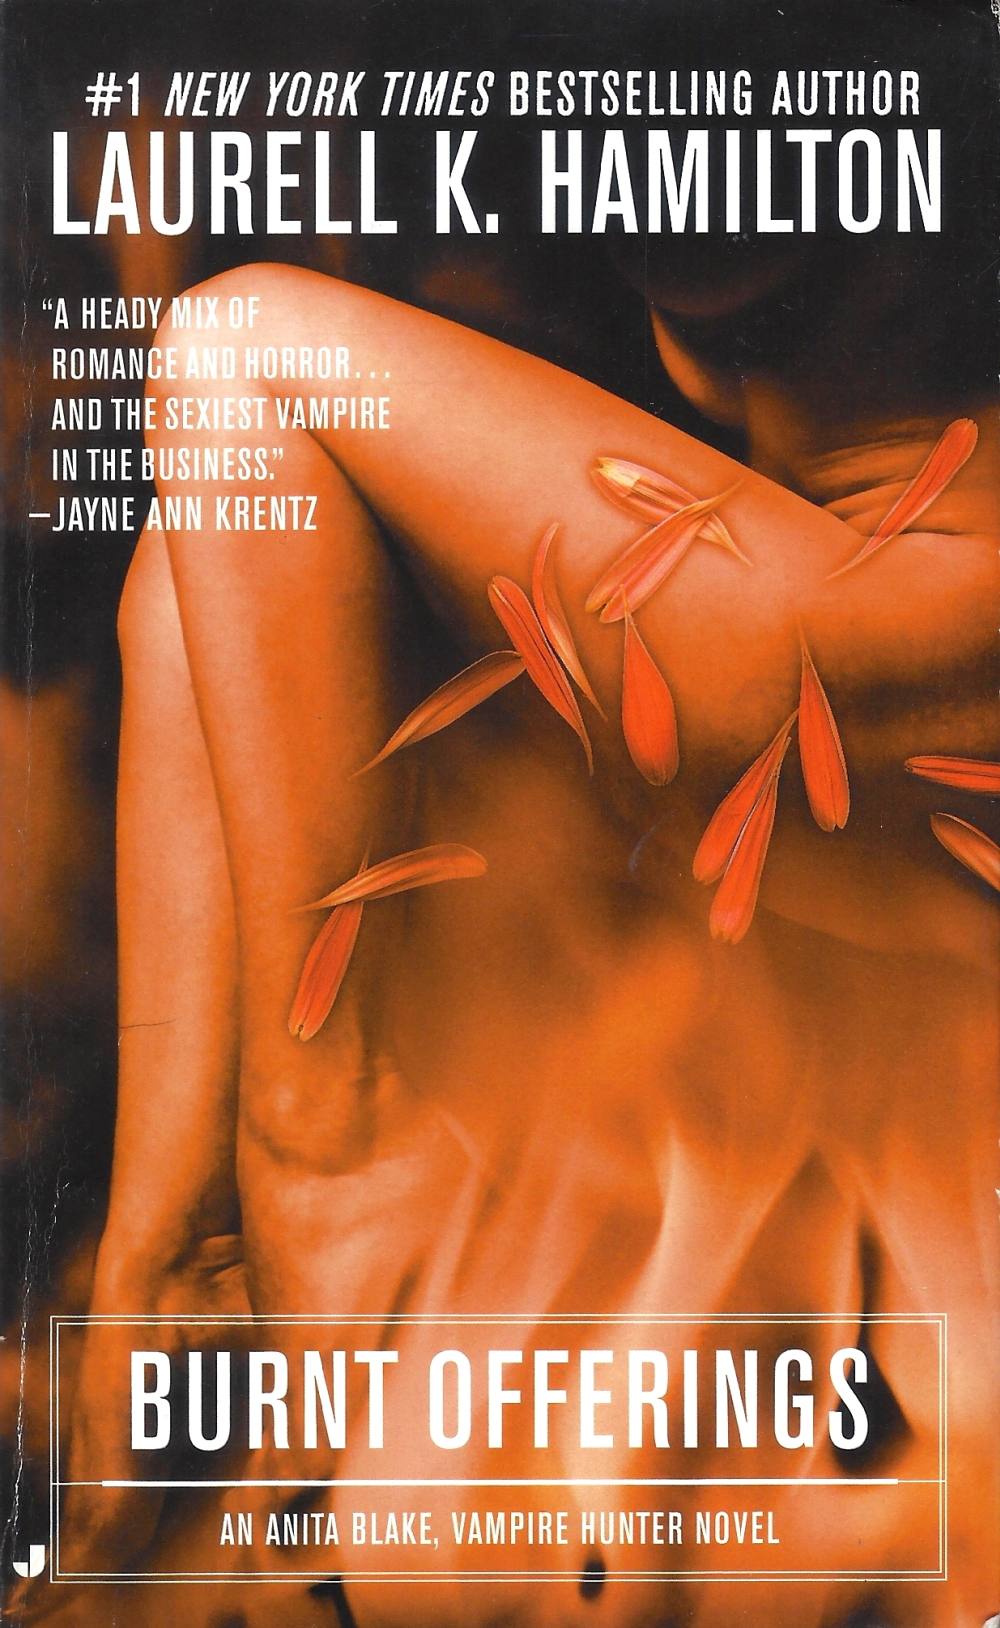 Cover des Buches "Burnt Offerings" von Laurell K. Hamilton